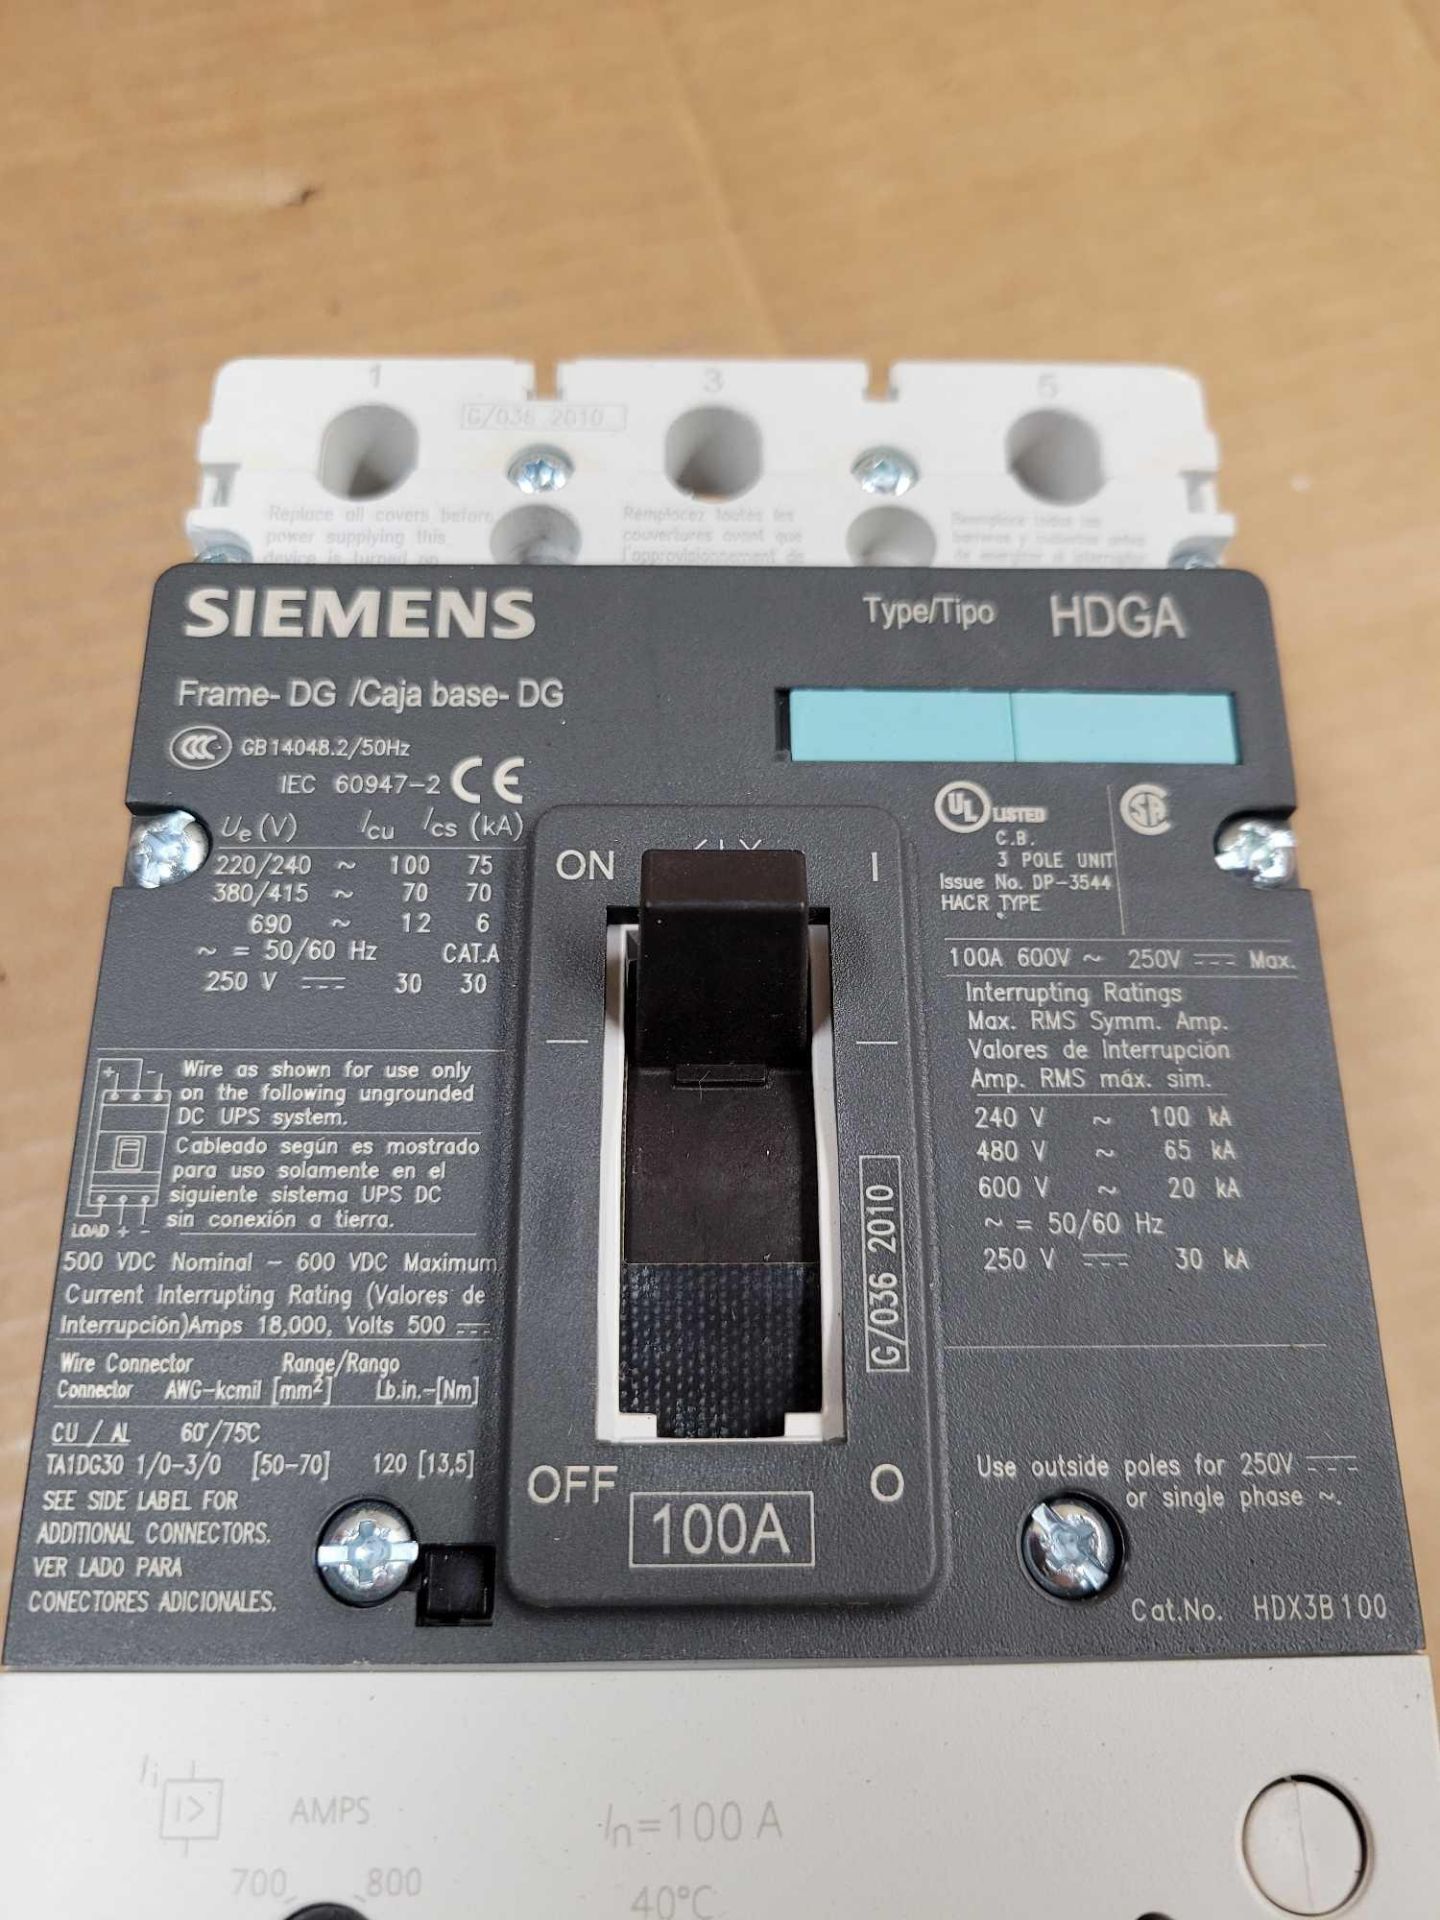 LOT OF 4 SIEMENS HDX3B100 / 100 Amp Circuit Breaker  /  Lot Weight: 18.6 lbs - Image 3 of 8